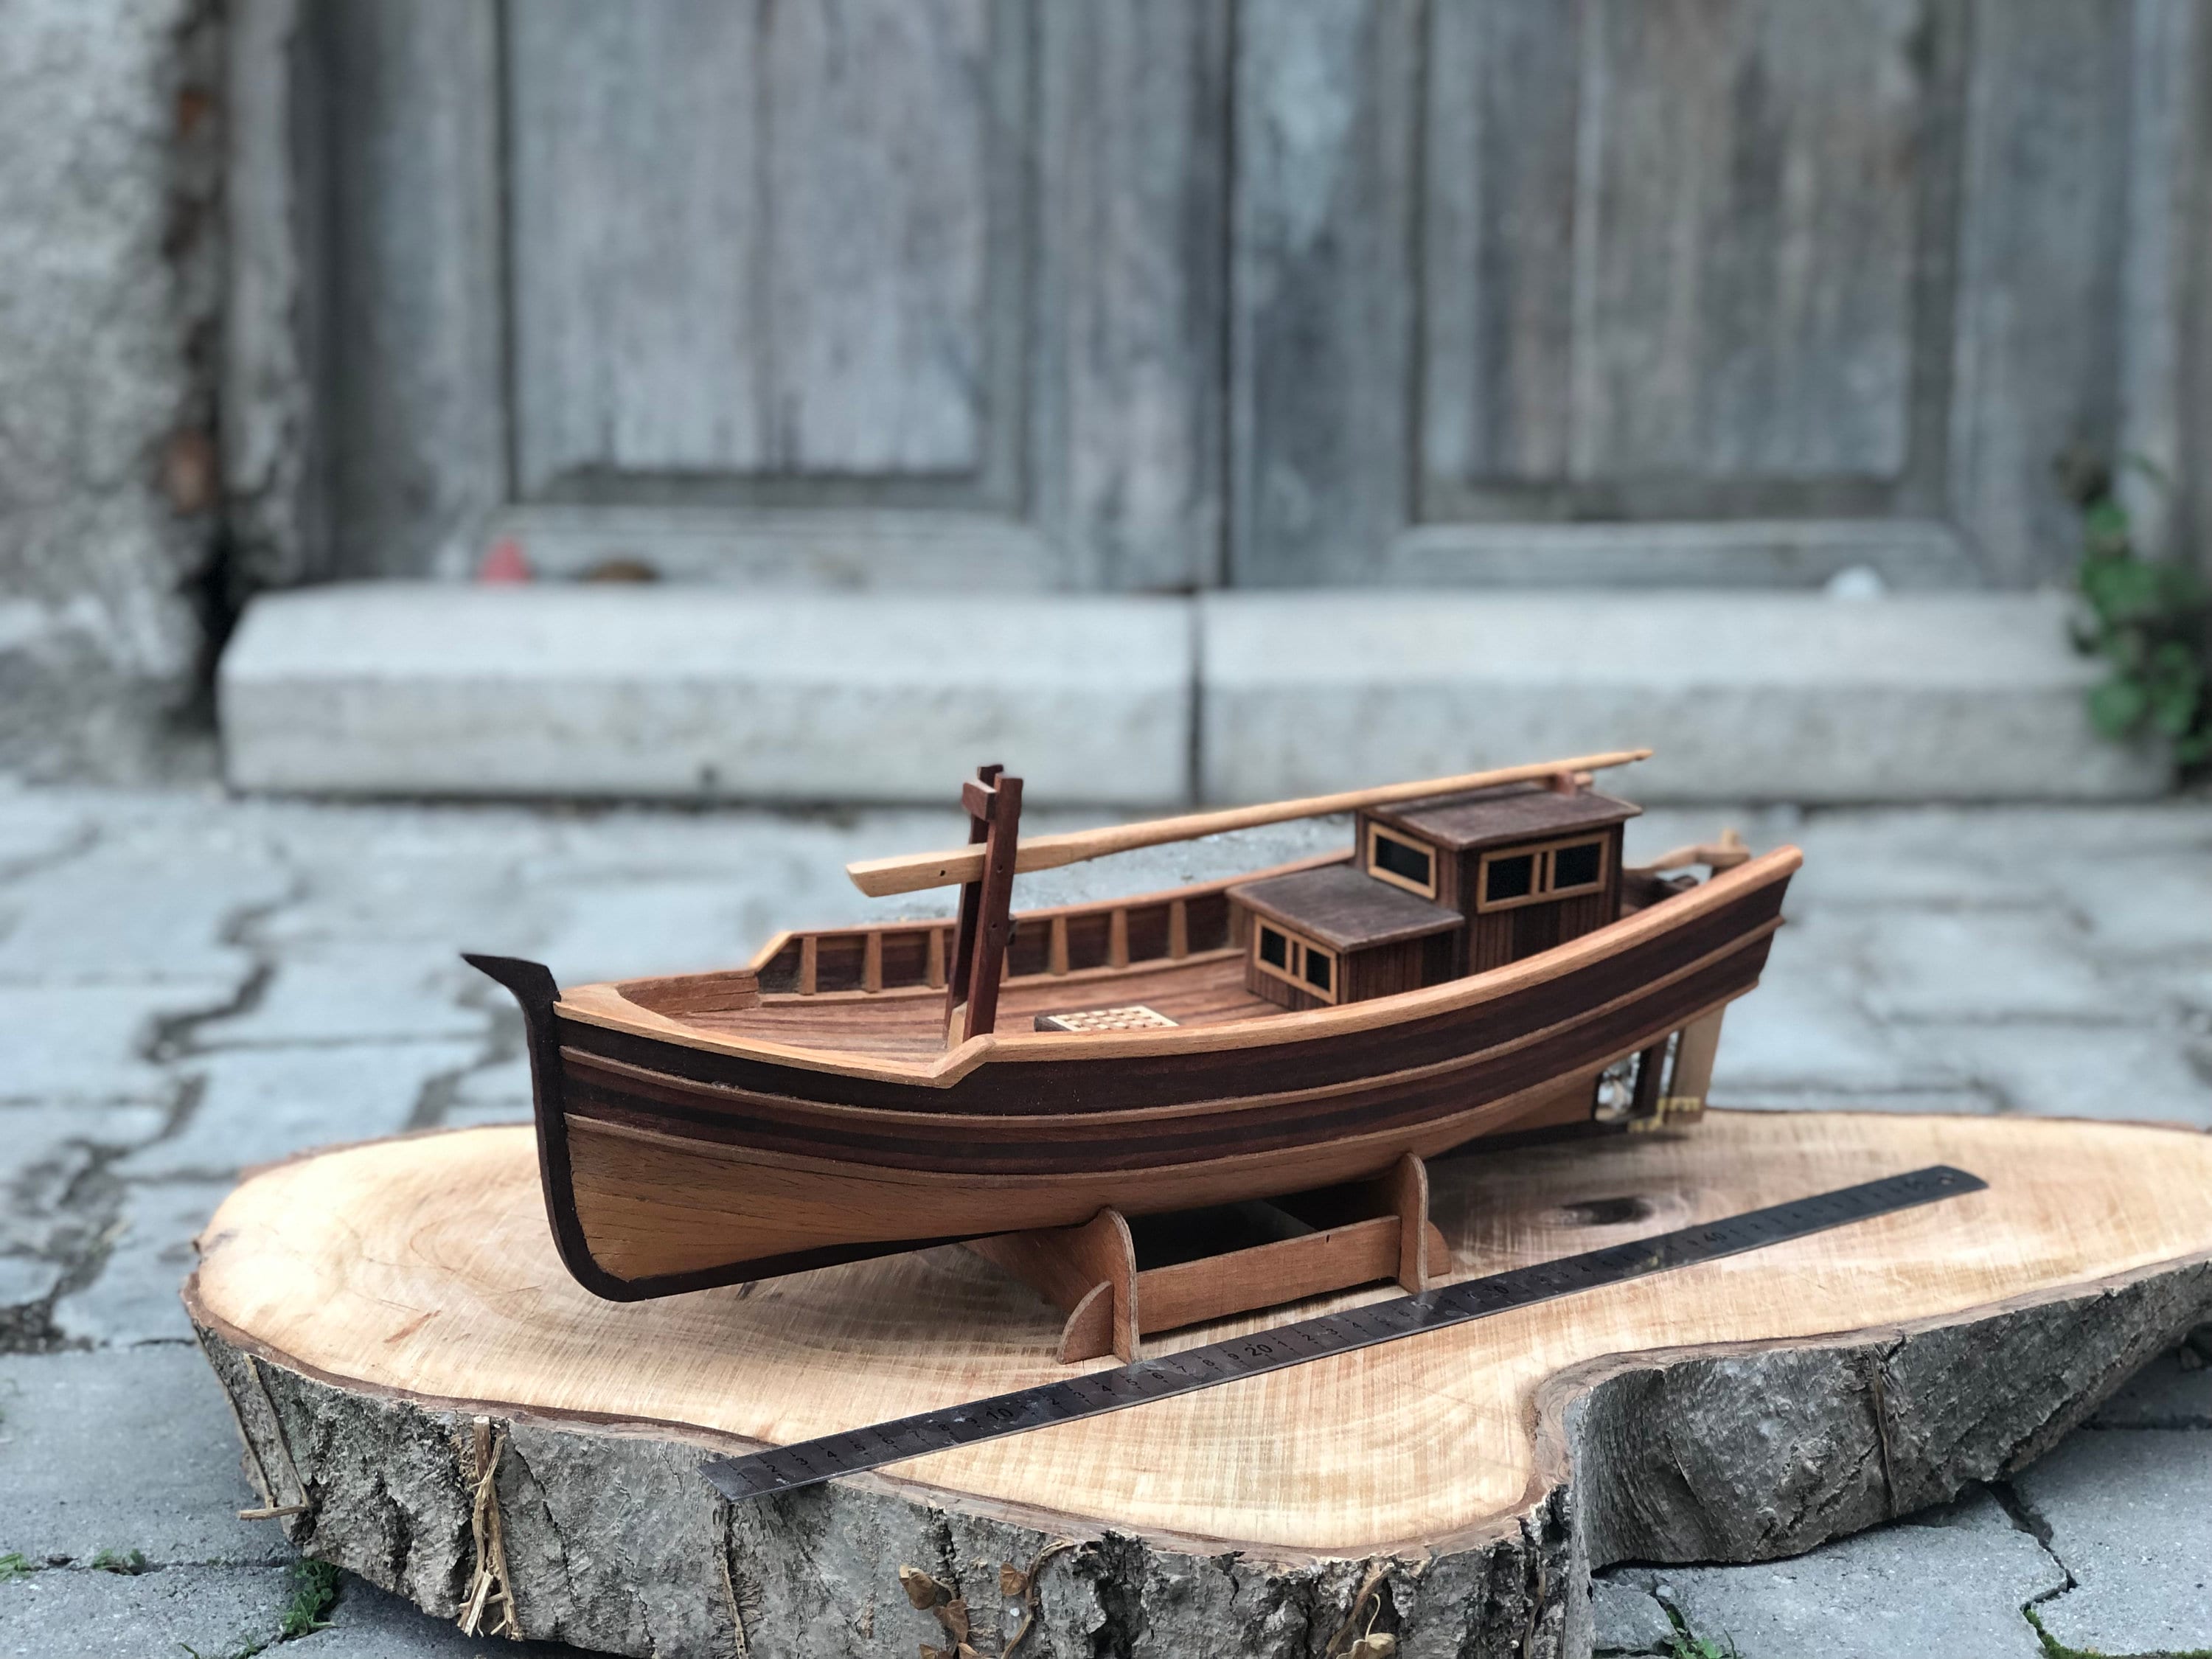 Wooden Fishing Boat Model Ship Wooden Ship Antique Ship Big